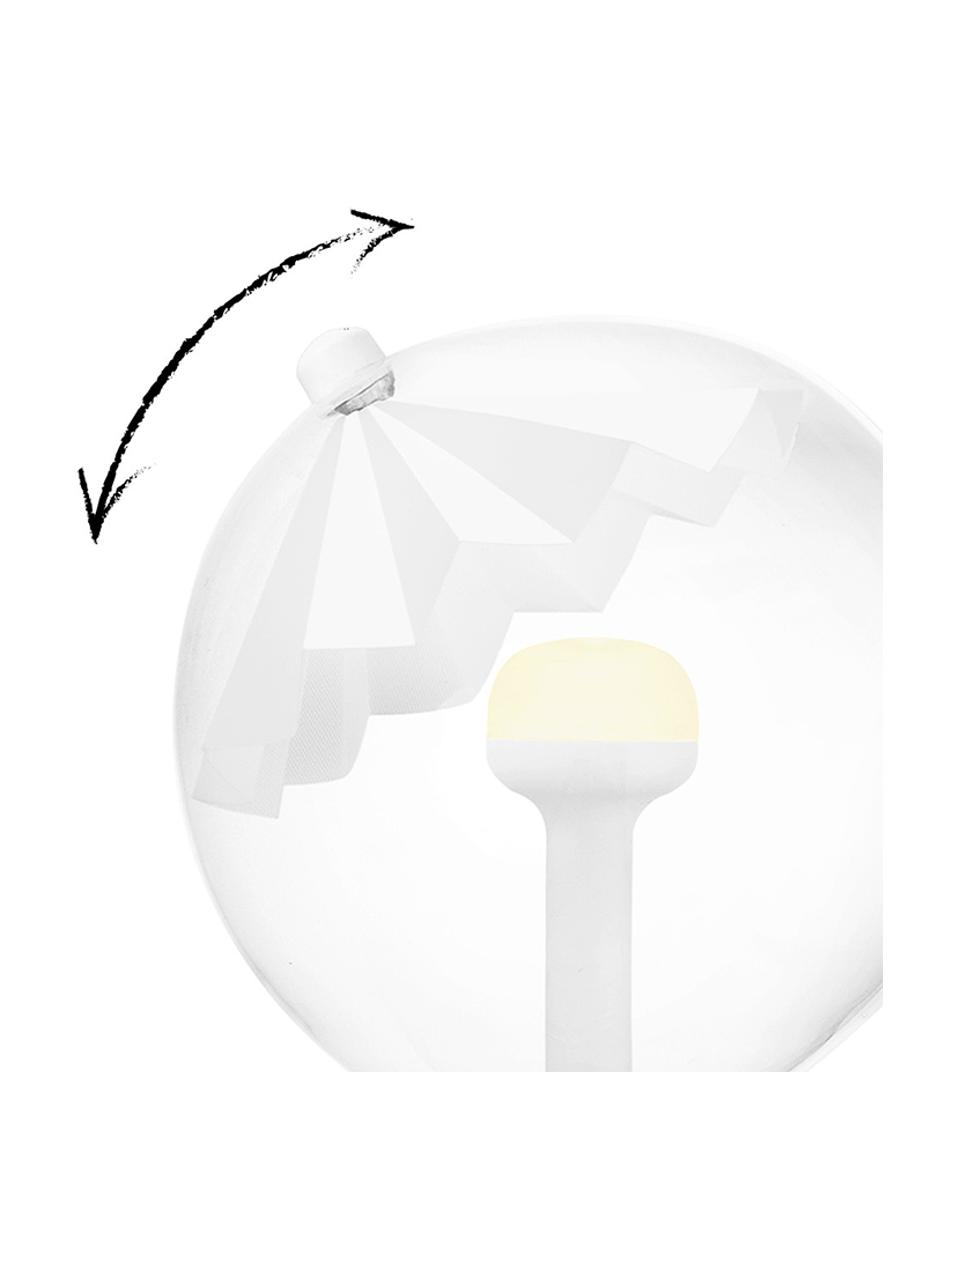 Žárovka E27, 400 lm, stmívatelná, teplá bílá, 1 ks, Bílá, transparentní, stříbrná, Ø 12 cm, V 19 cm